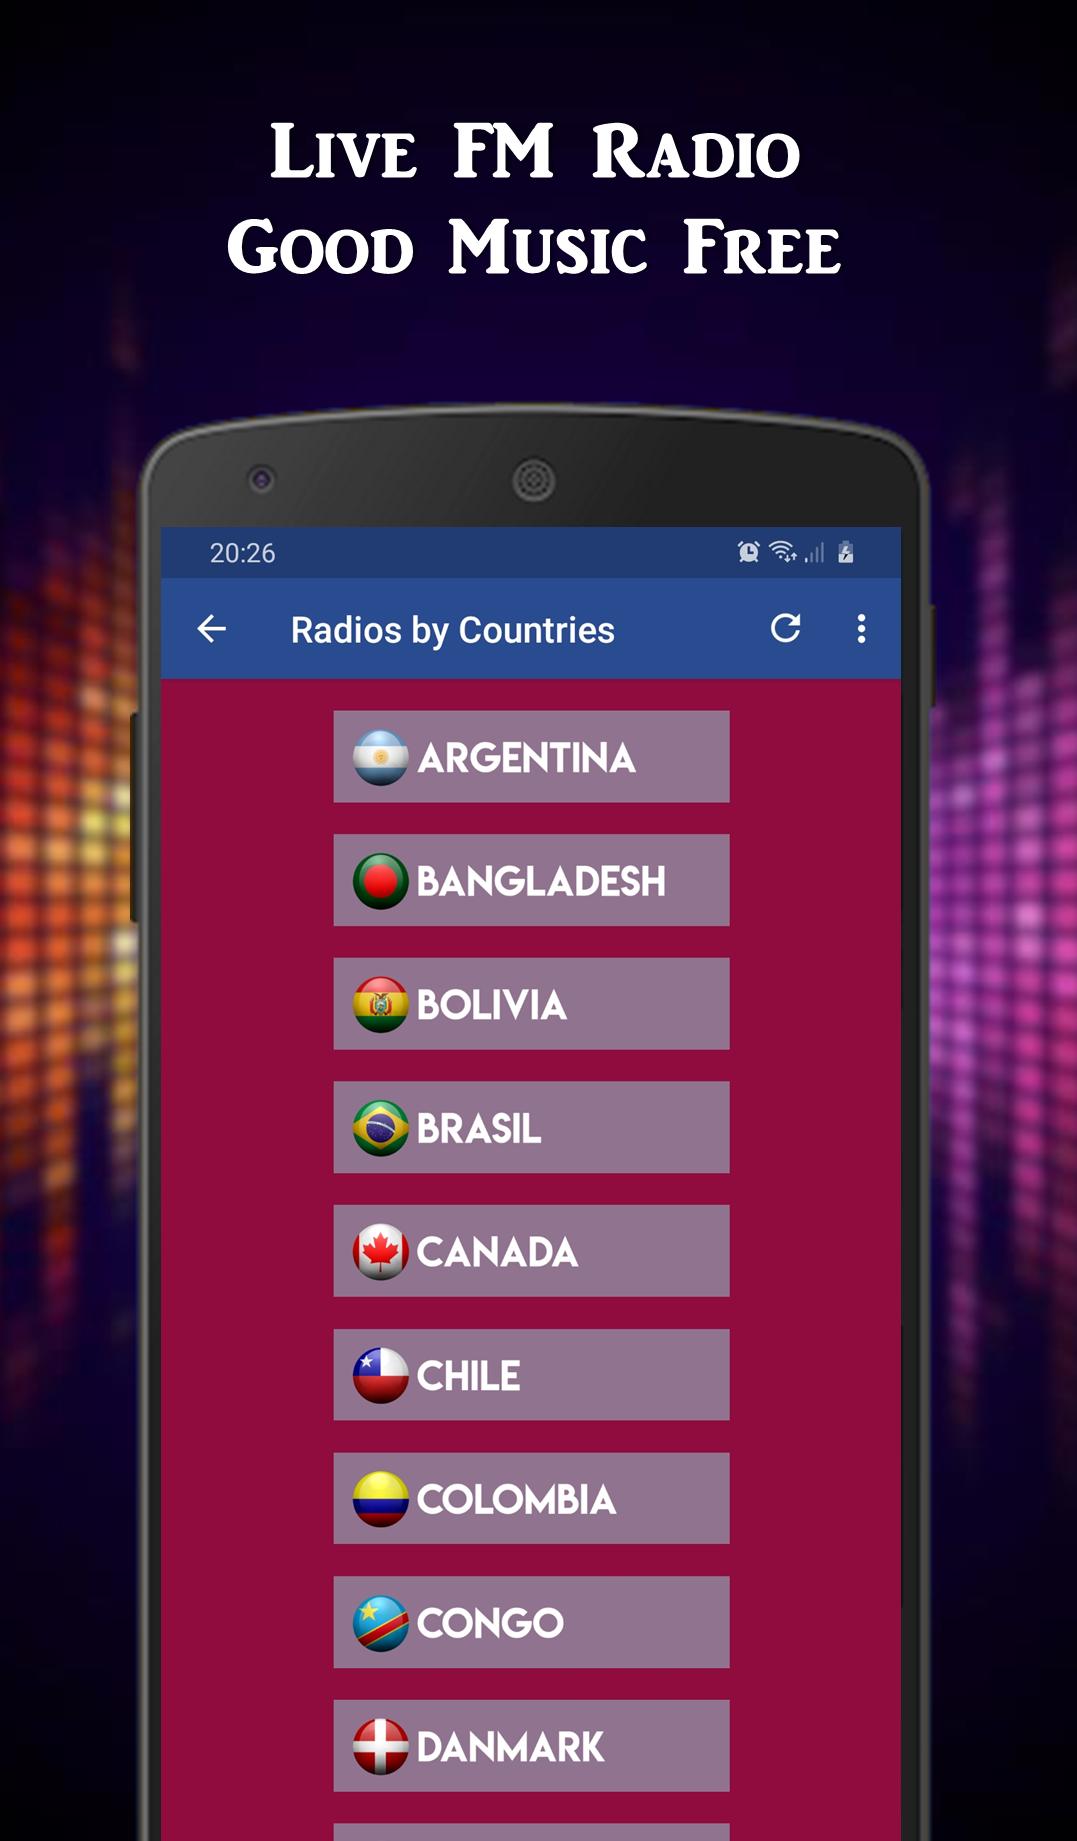 Radio Uno Cali 100.5 FM for Android - APK Download